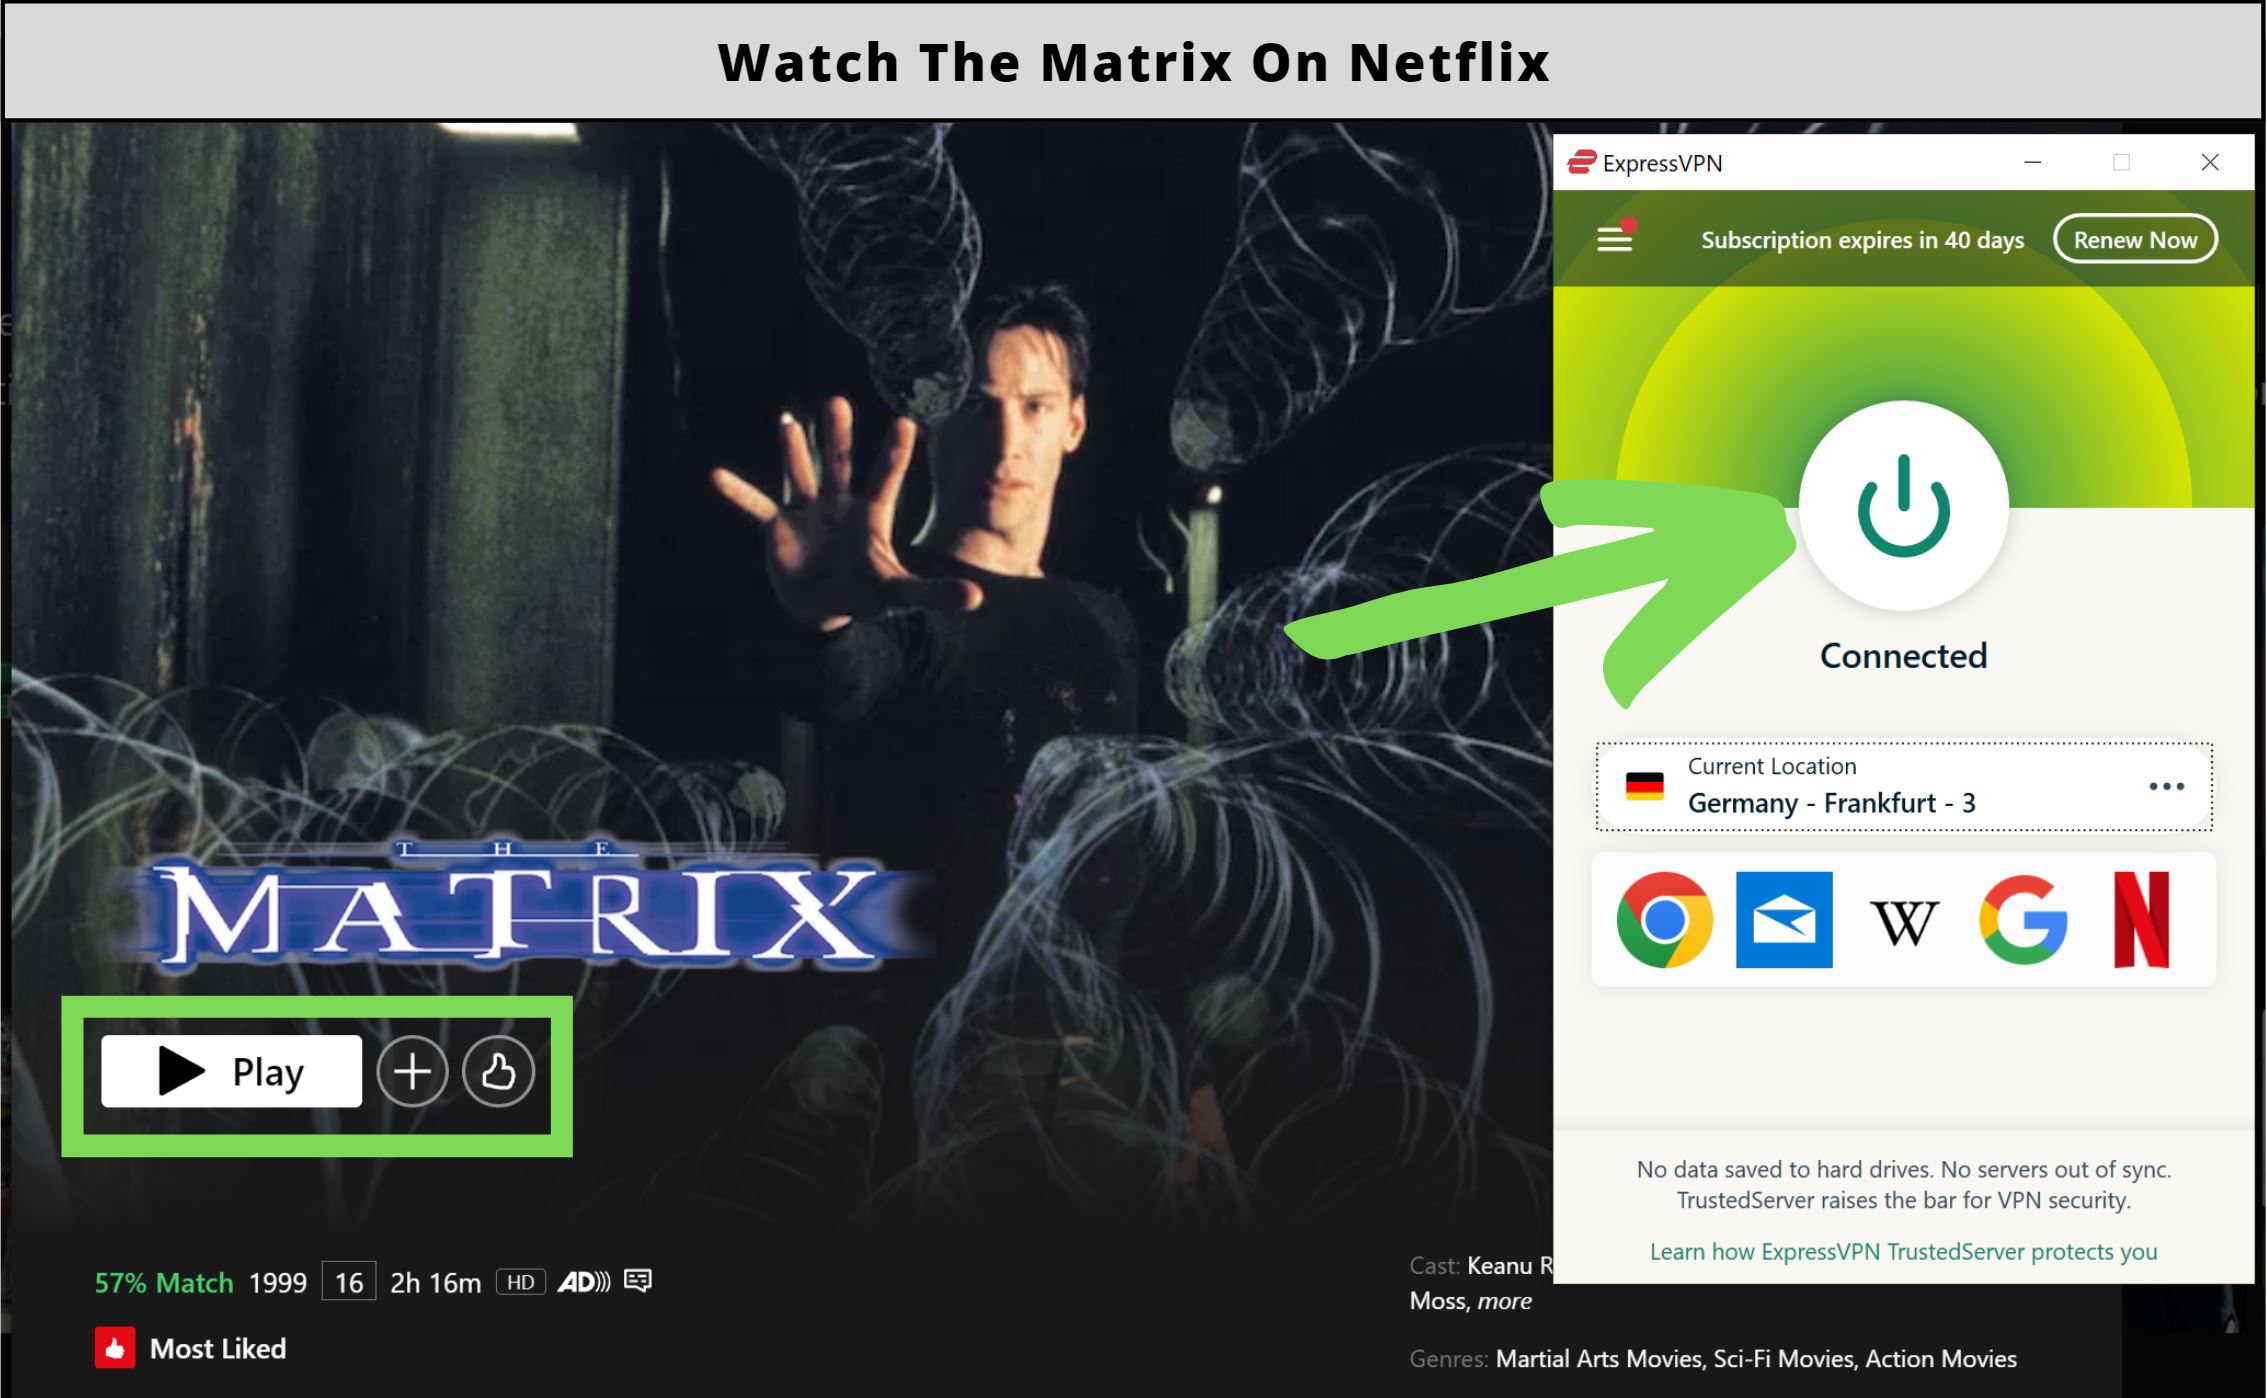 is the matrix on netflix